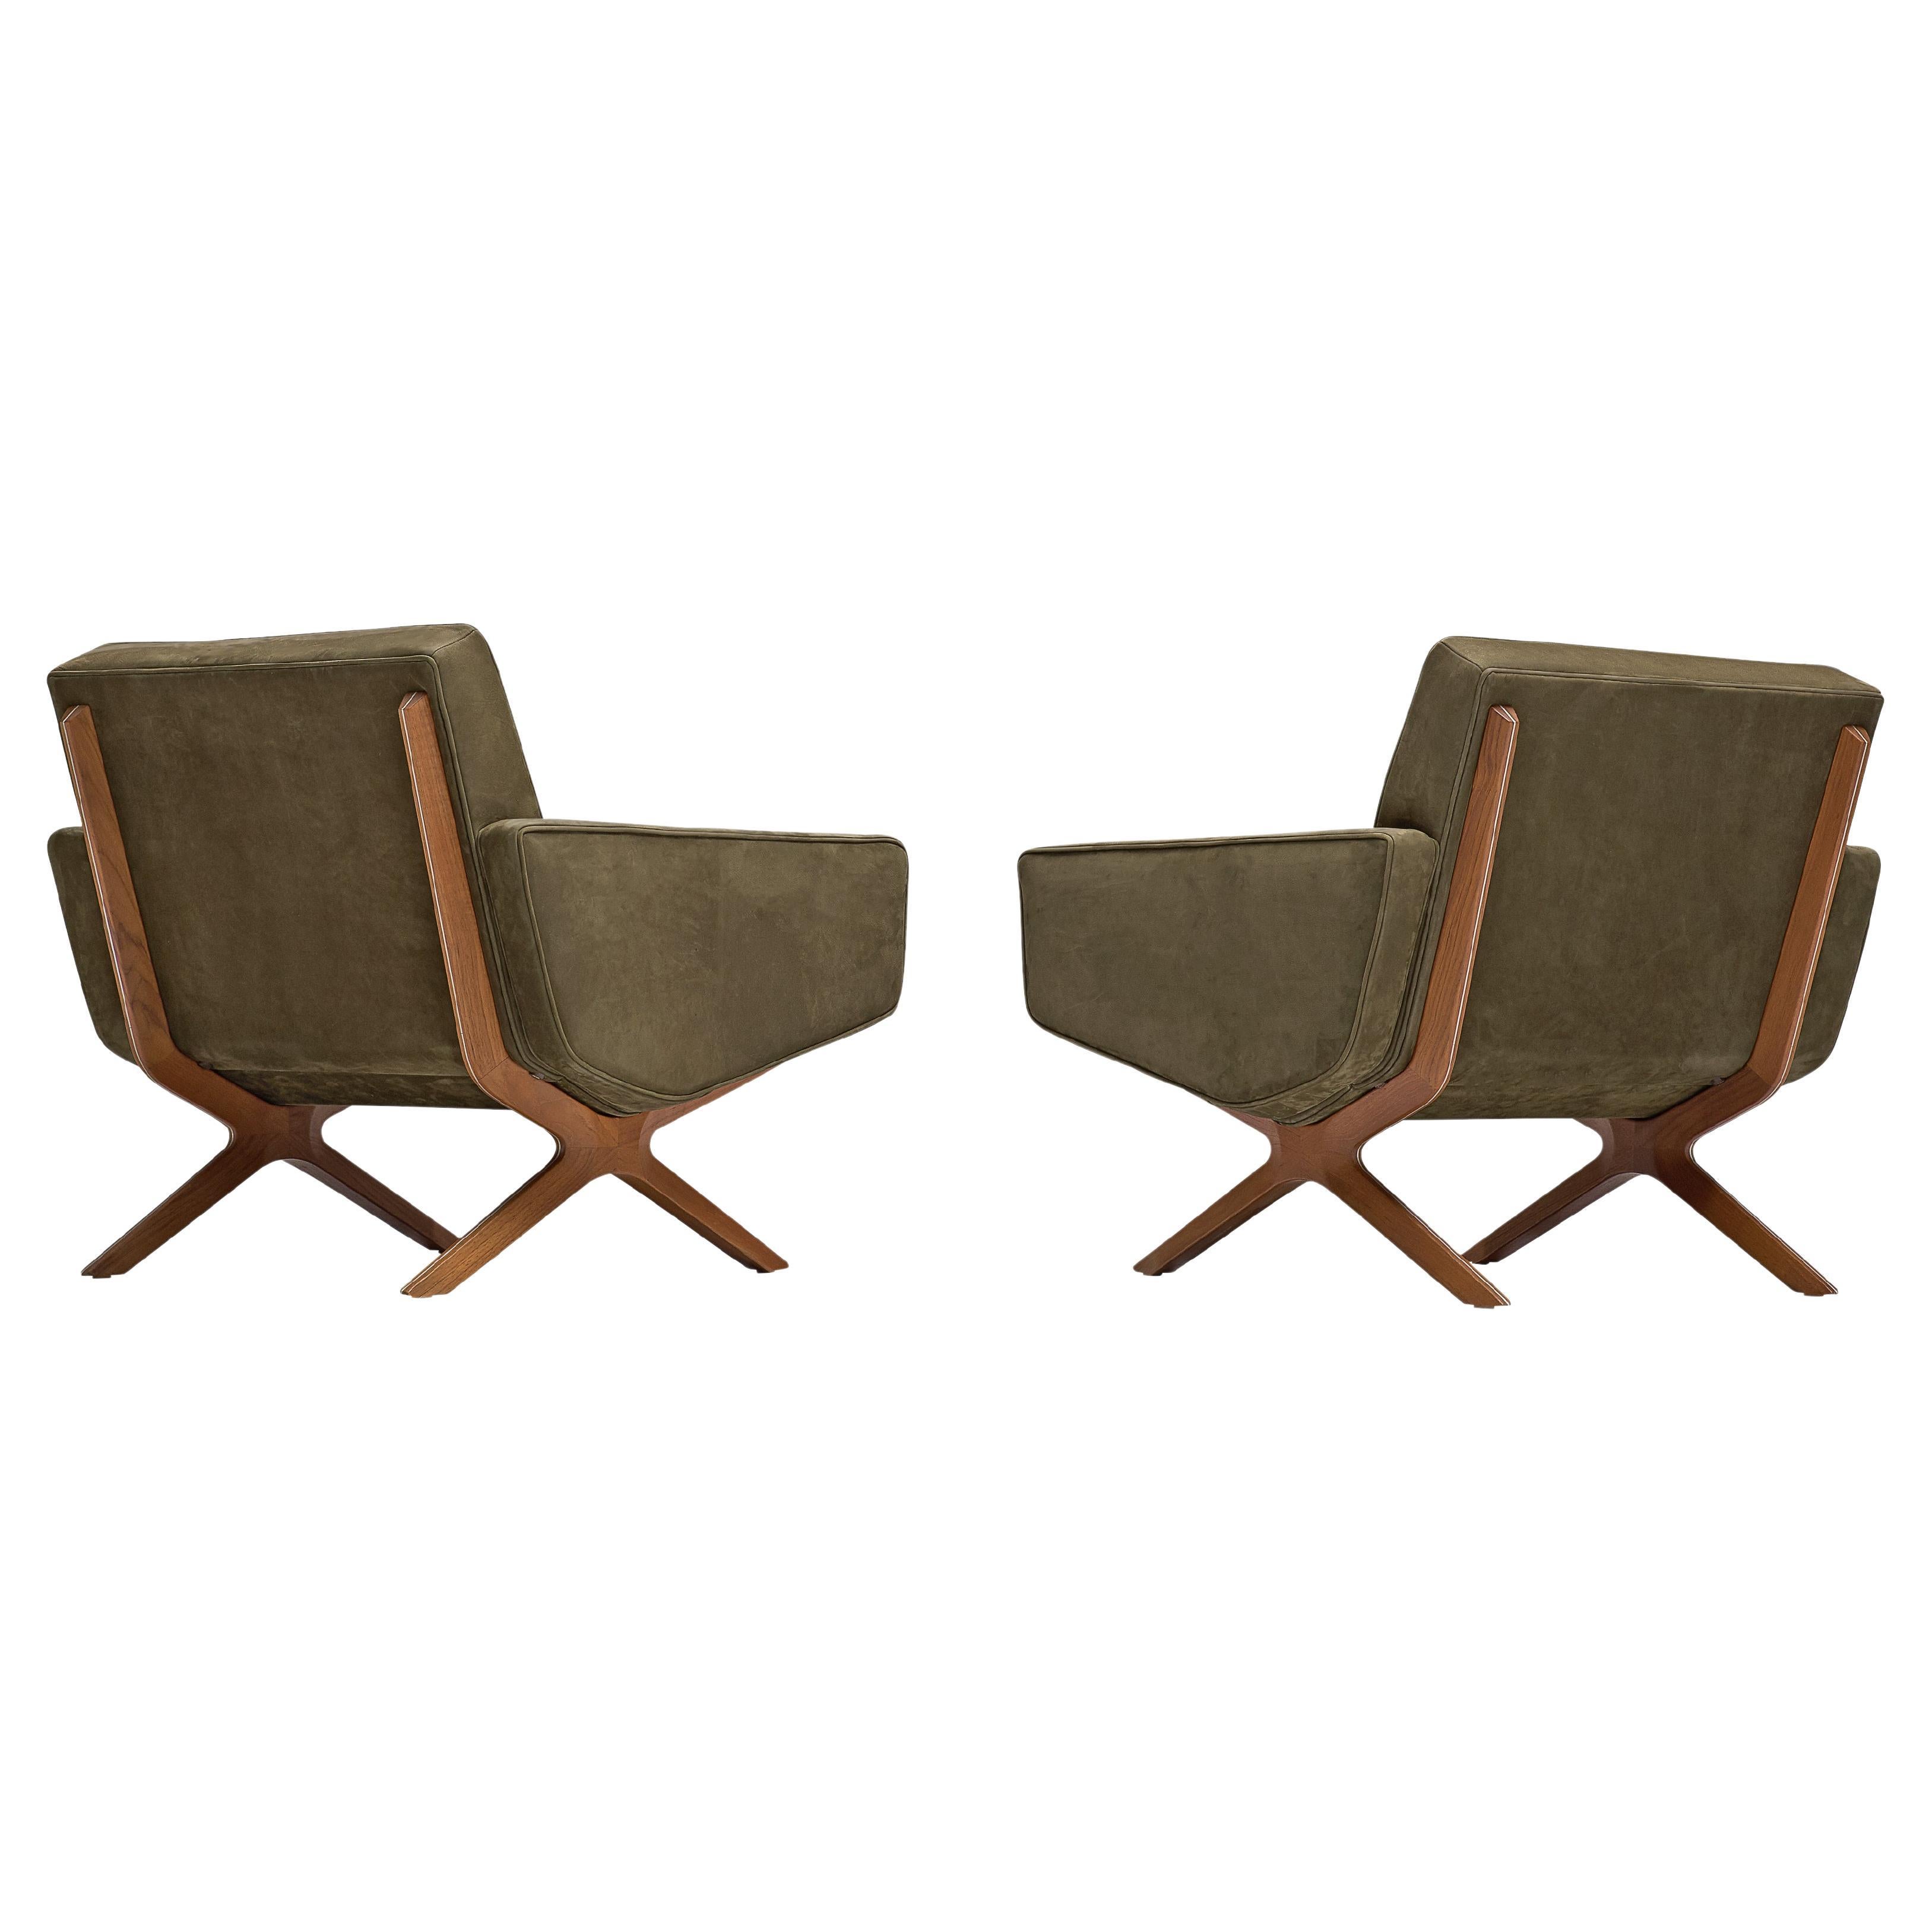 Hvidt & Mølgaard for France & Søn Pair of 'Silverline' Lounge Chairs in Teak